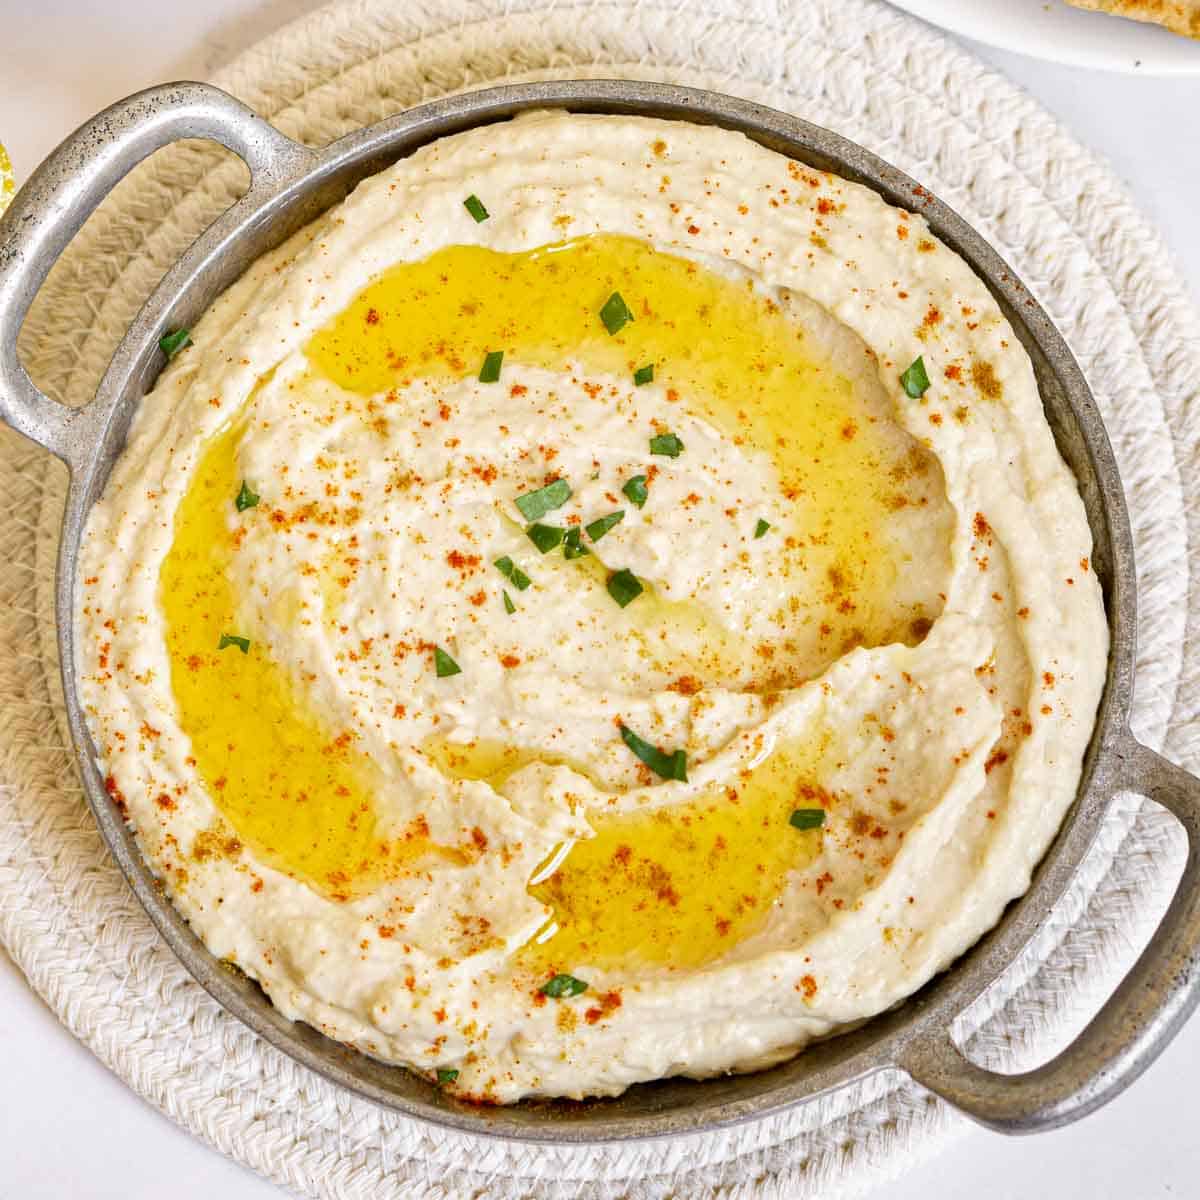 Butterbean hummus in a bowl